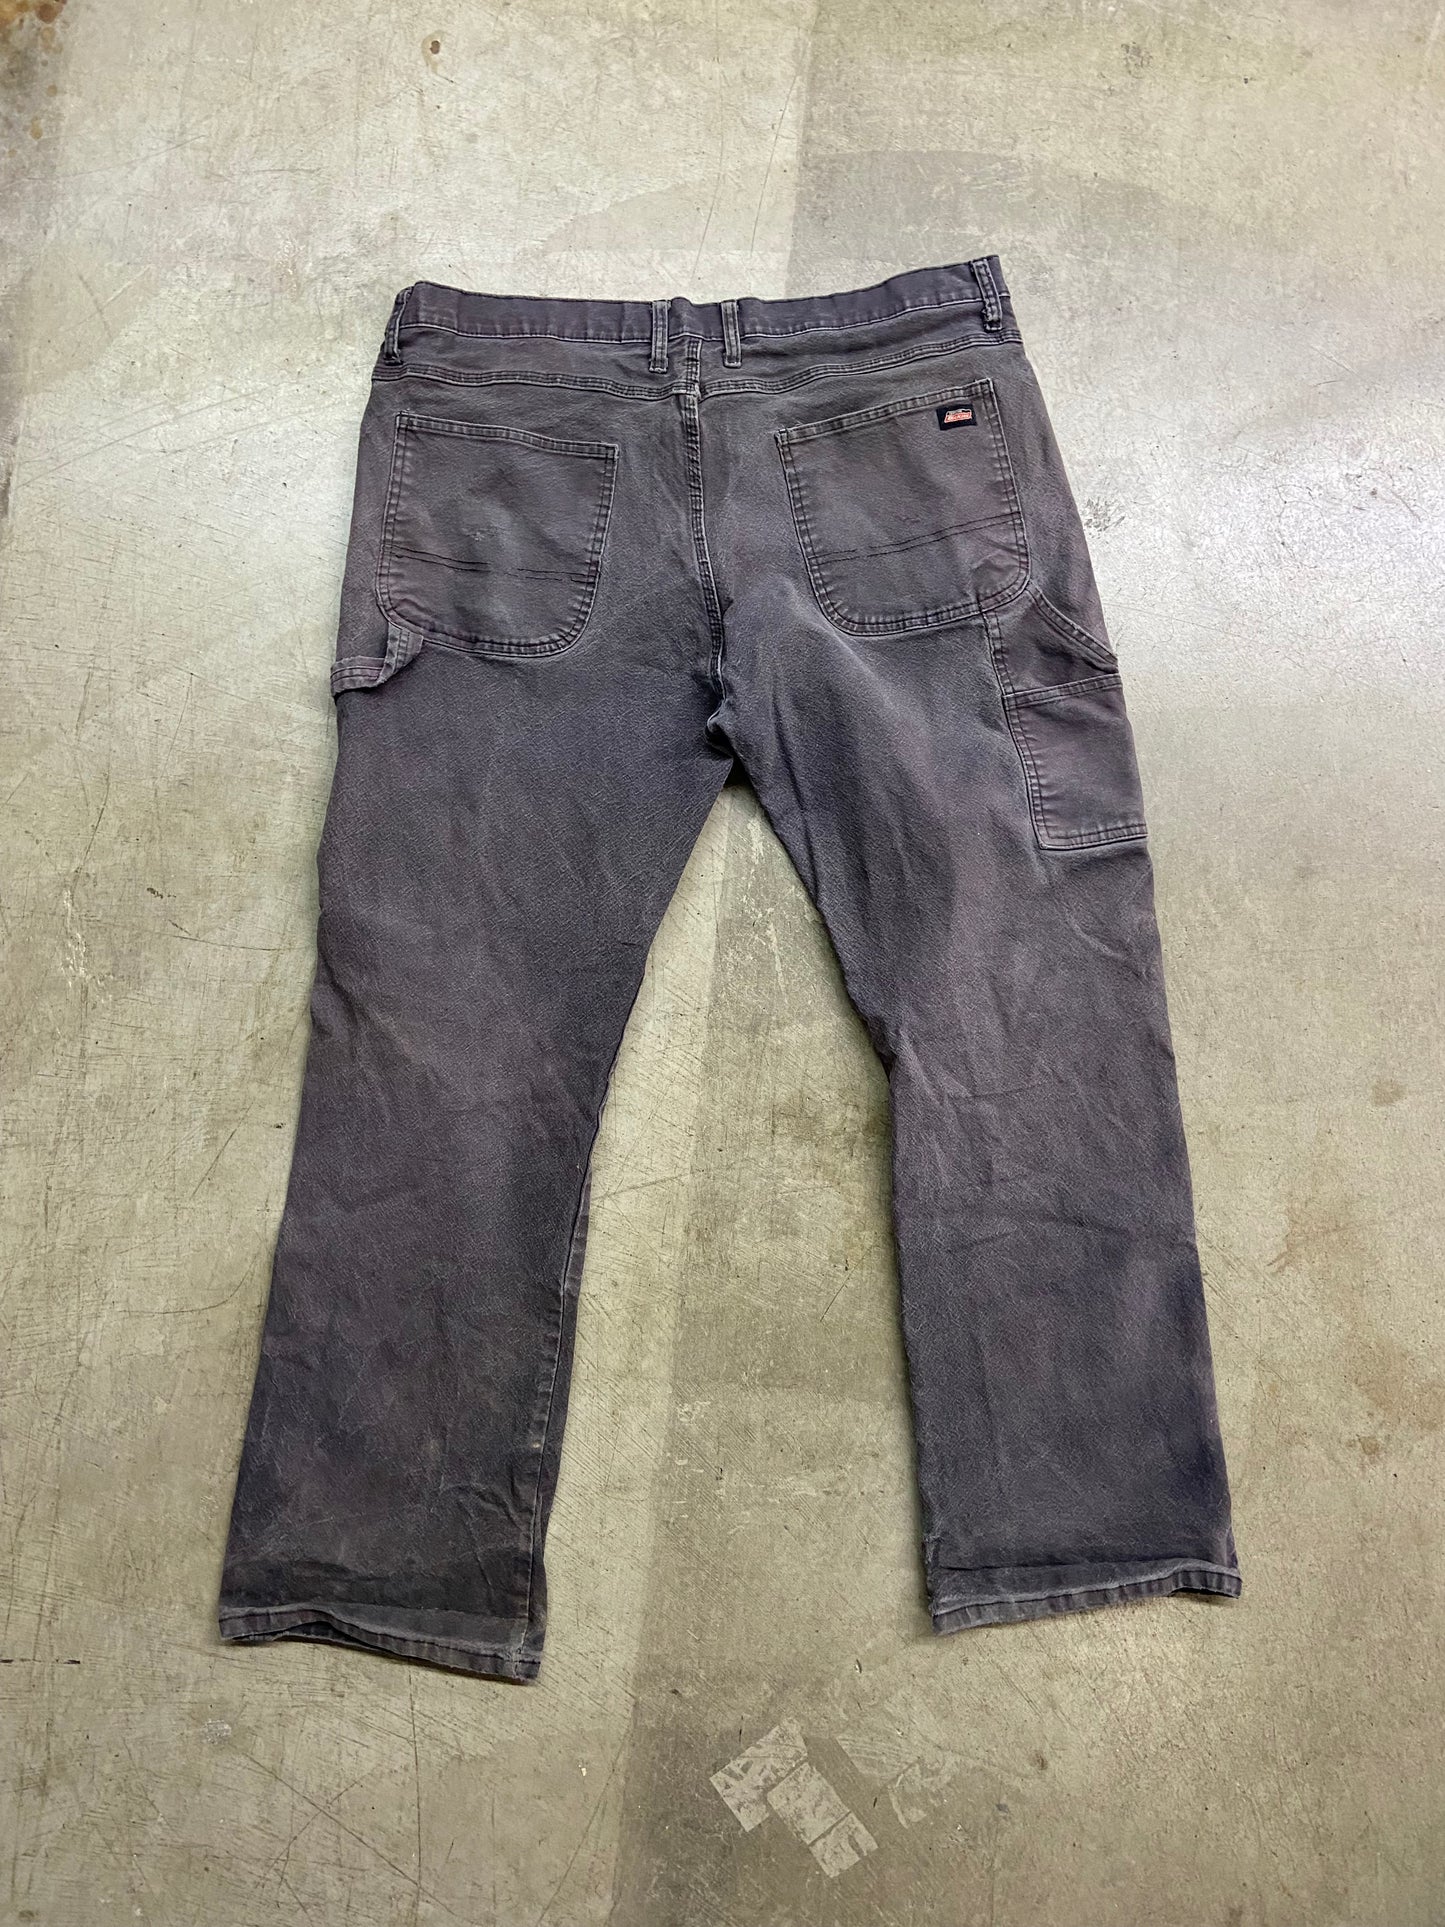 VTG Dickies Faded Grey/Purple Baggy Jeans Sz 40x30